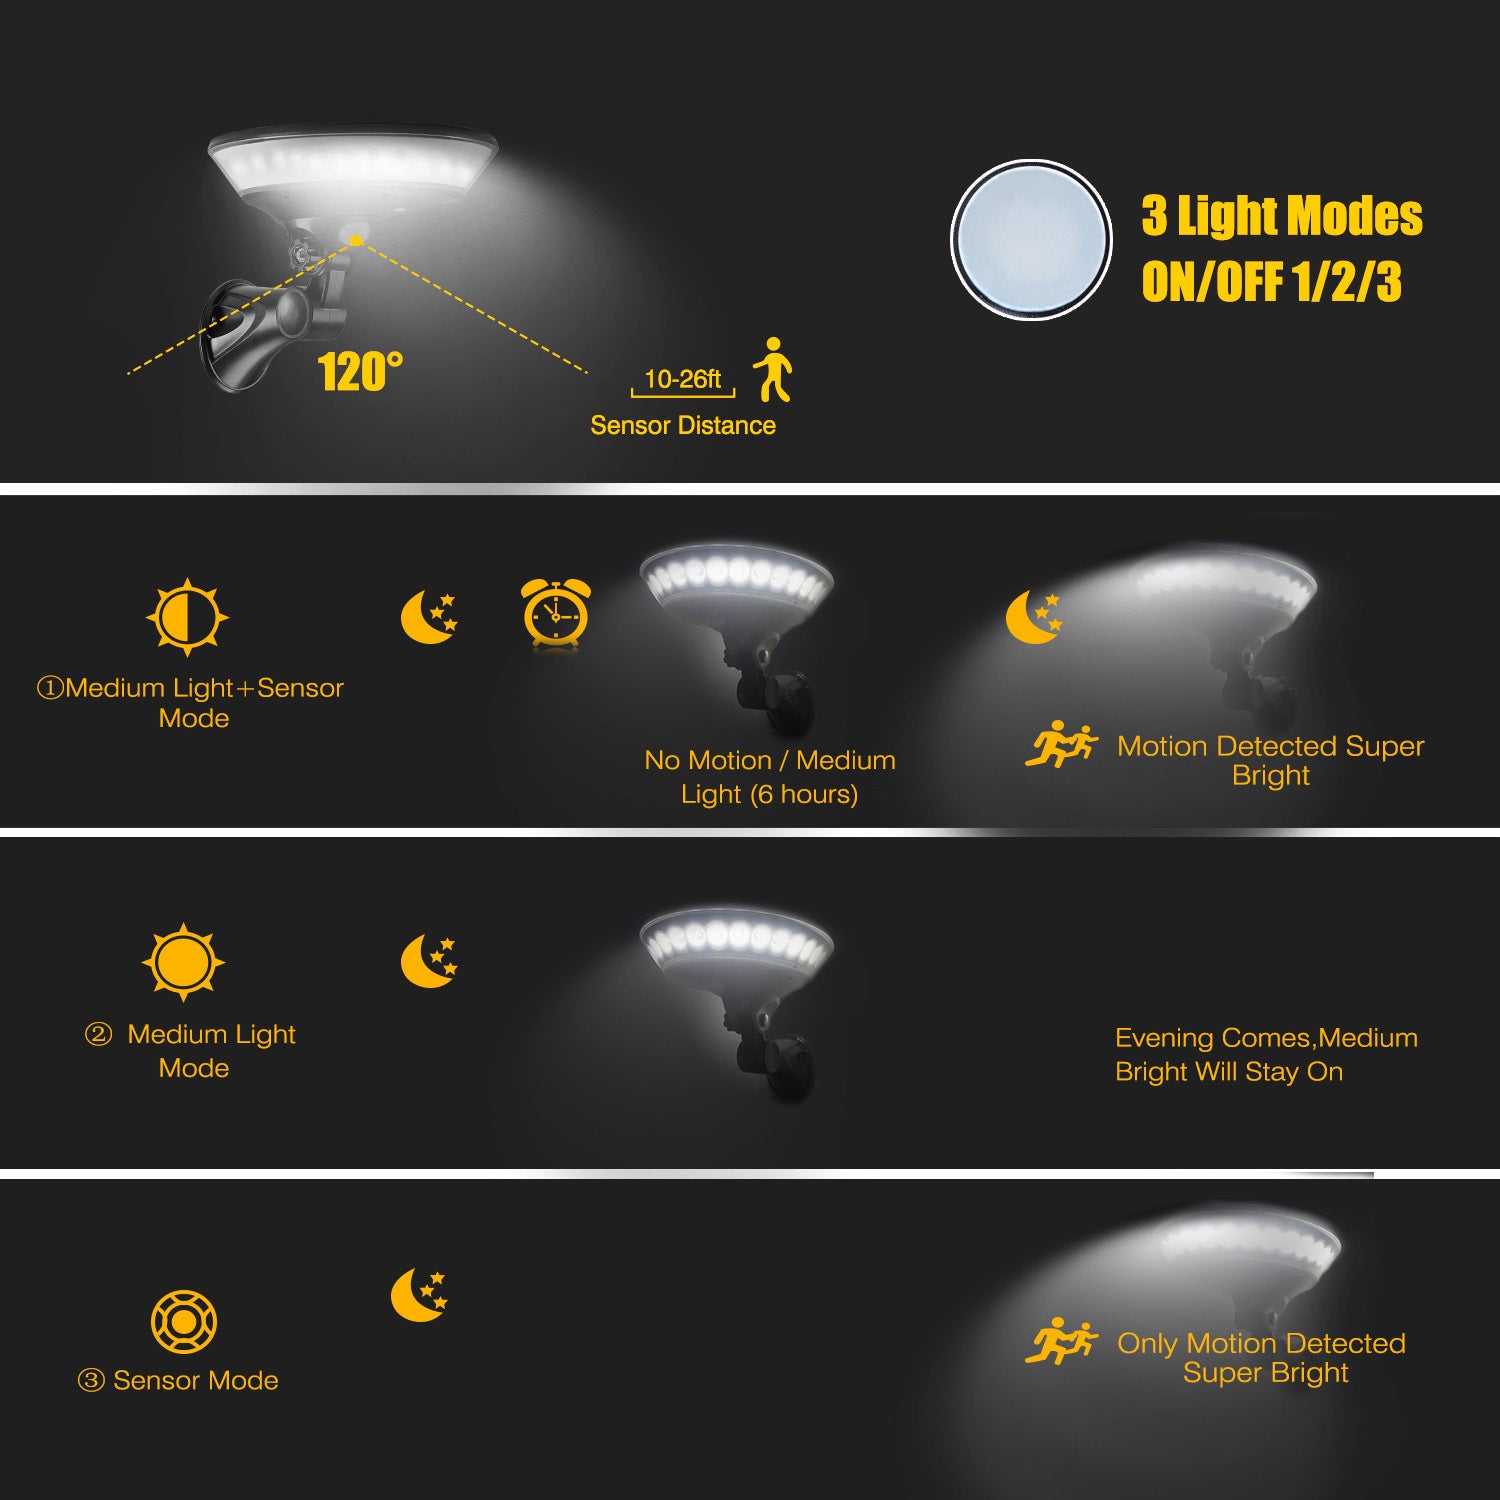 360 Degree Luminous Solar Light - Luxitt